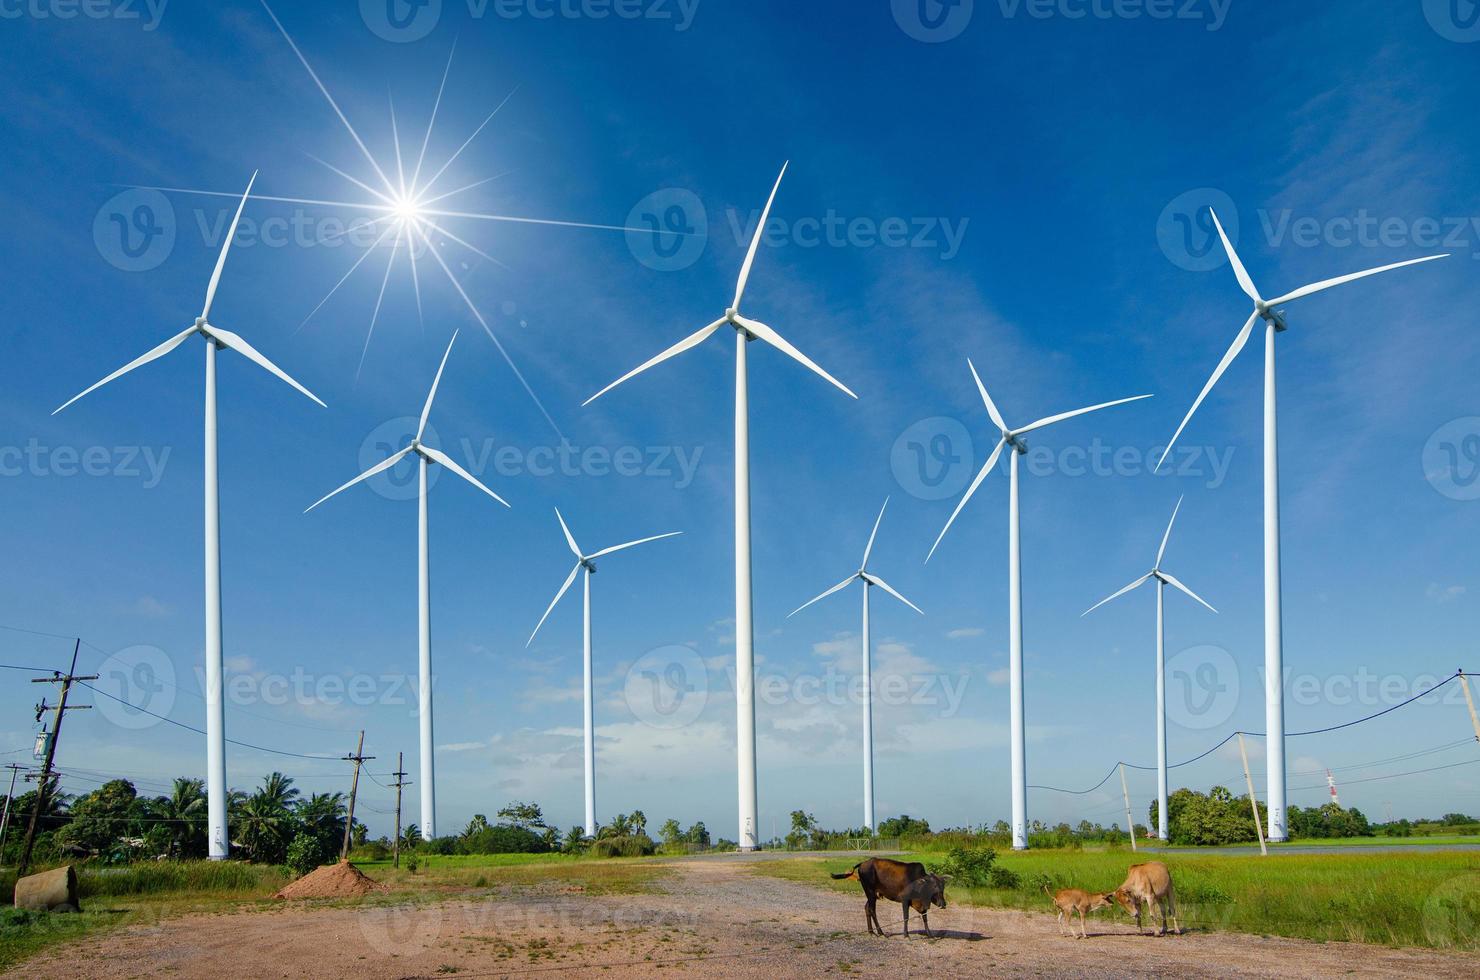 vindkraft energi grön ekologisk energiproduktion. vindkraftverk ekofält vacker himmel hua sai distrikt nakhon si thammarat thailand foto